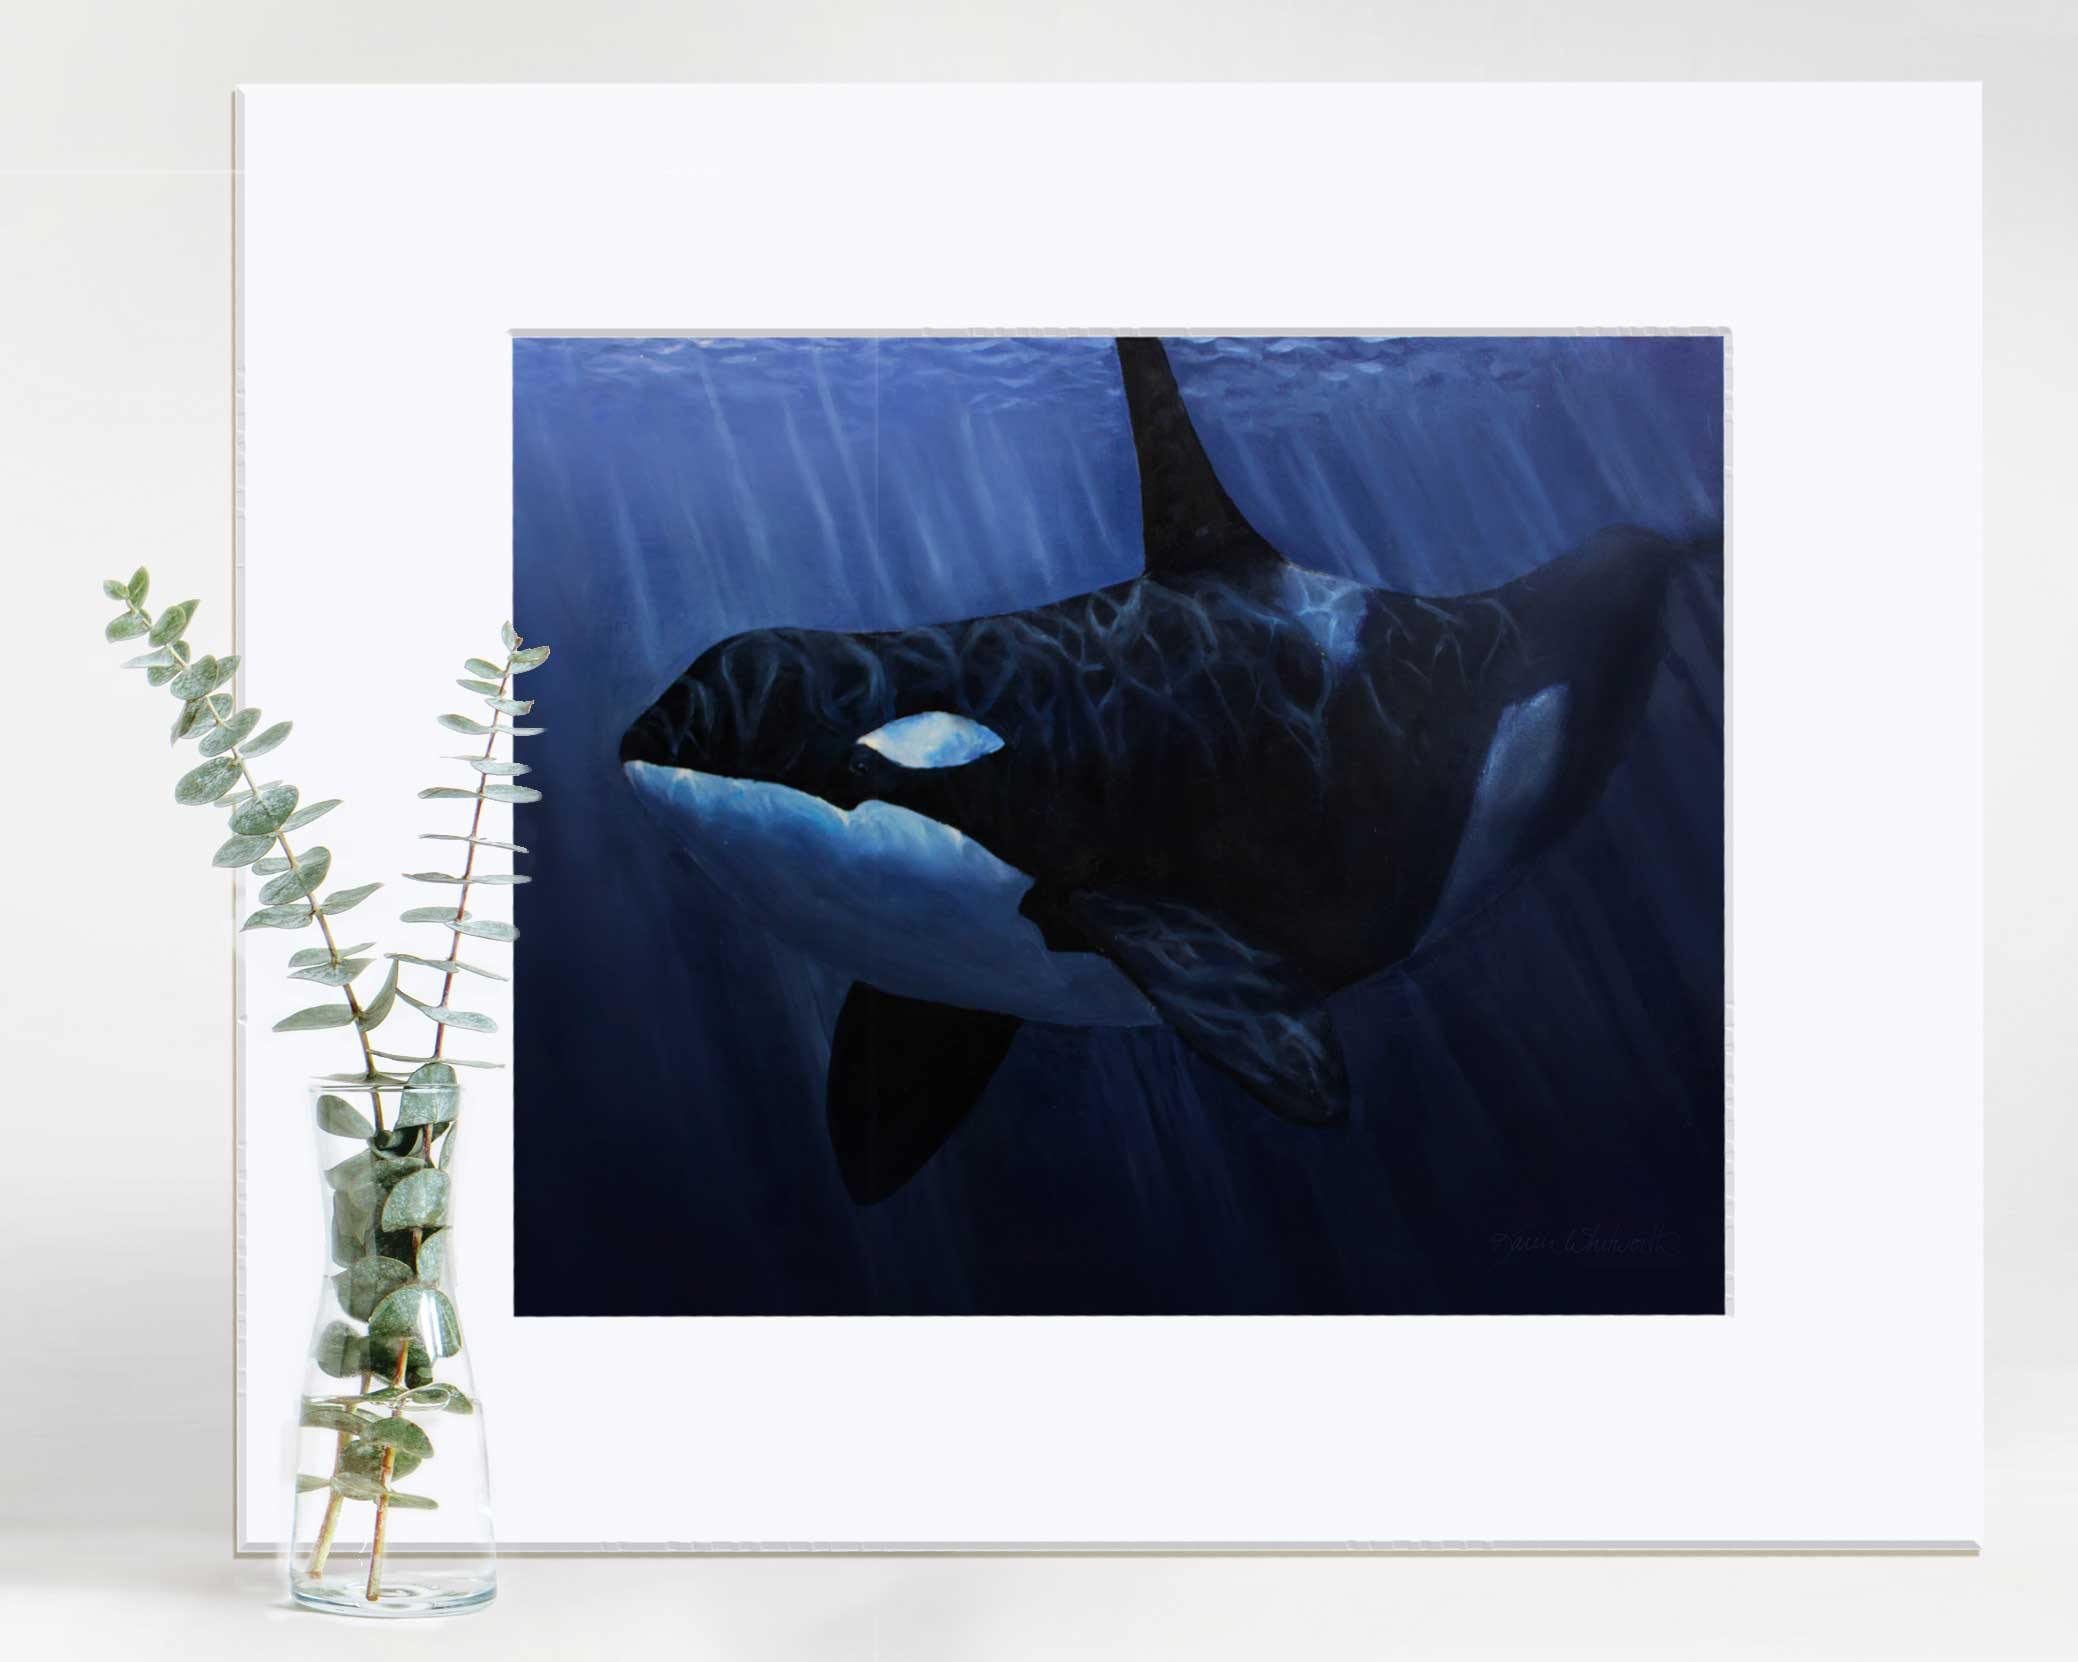 Wall art print of Orca killer whale and deep blue ocean in a painting by ocean artist Karen Whitworth